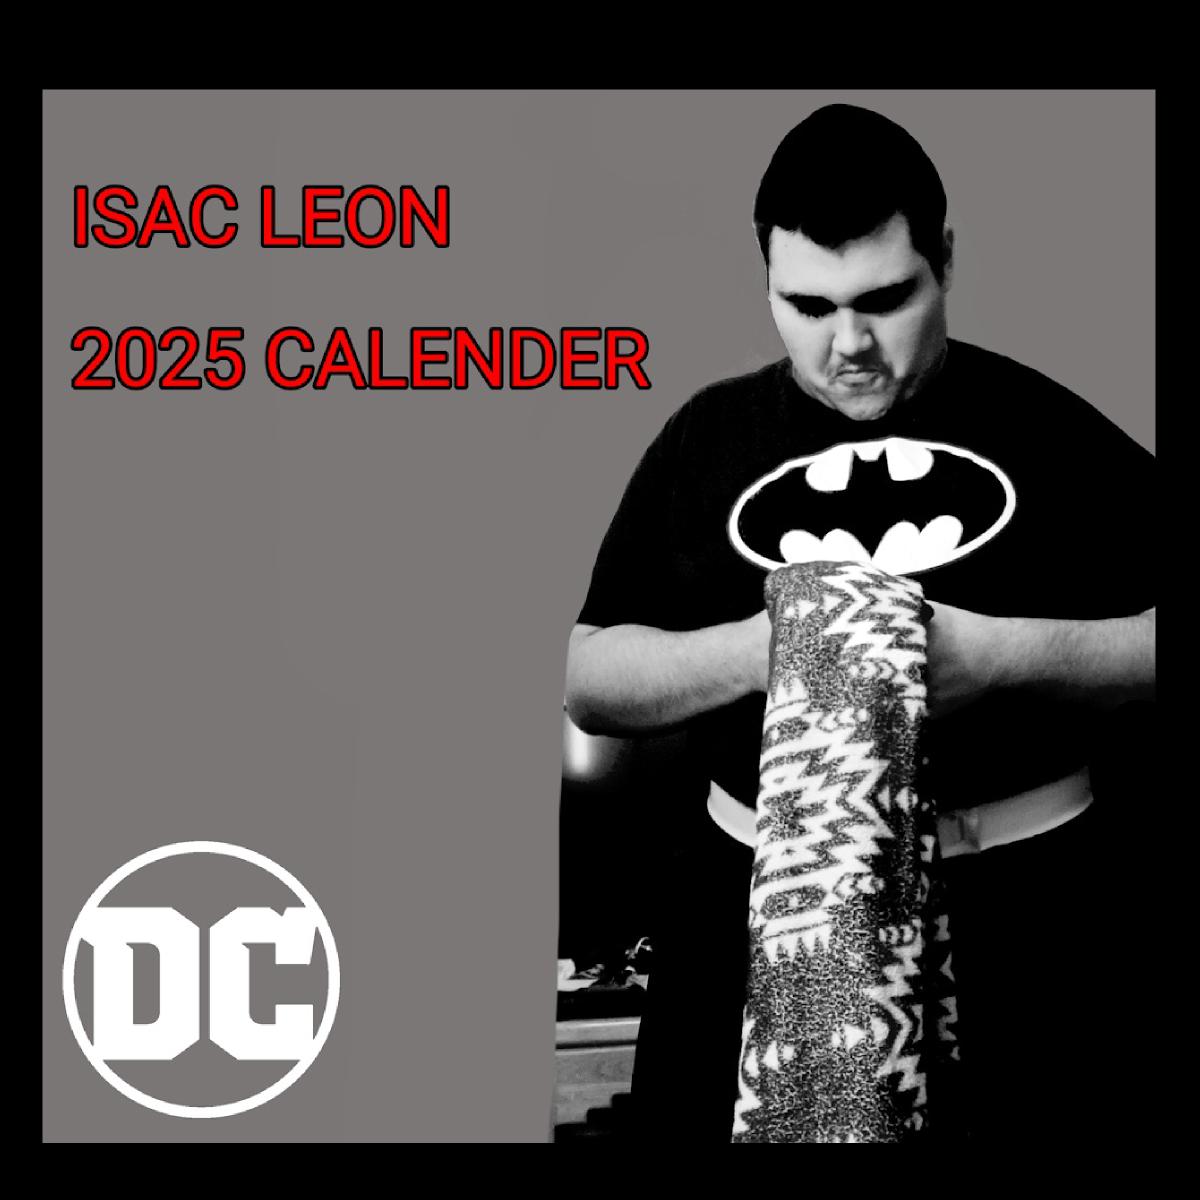 Isac Leon 2025 Calender